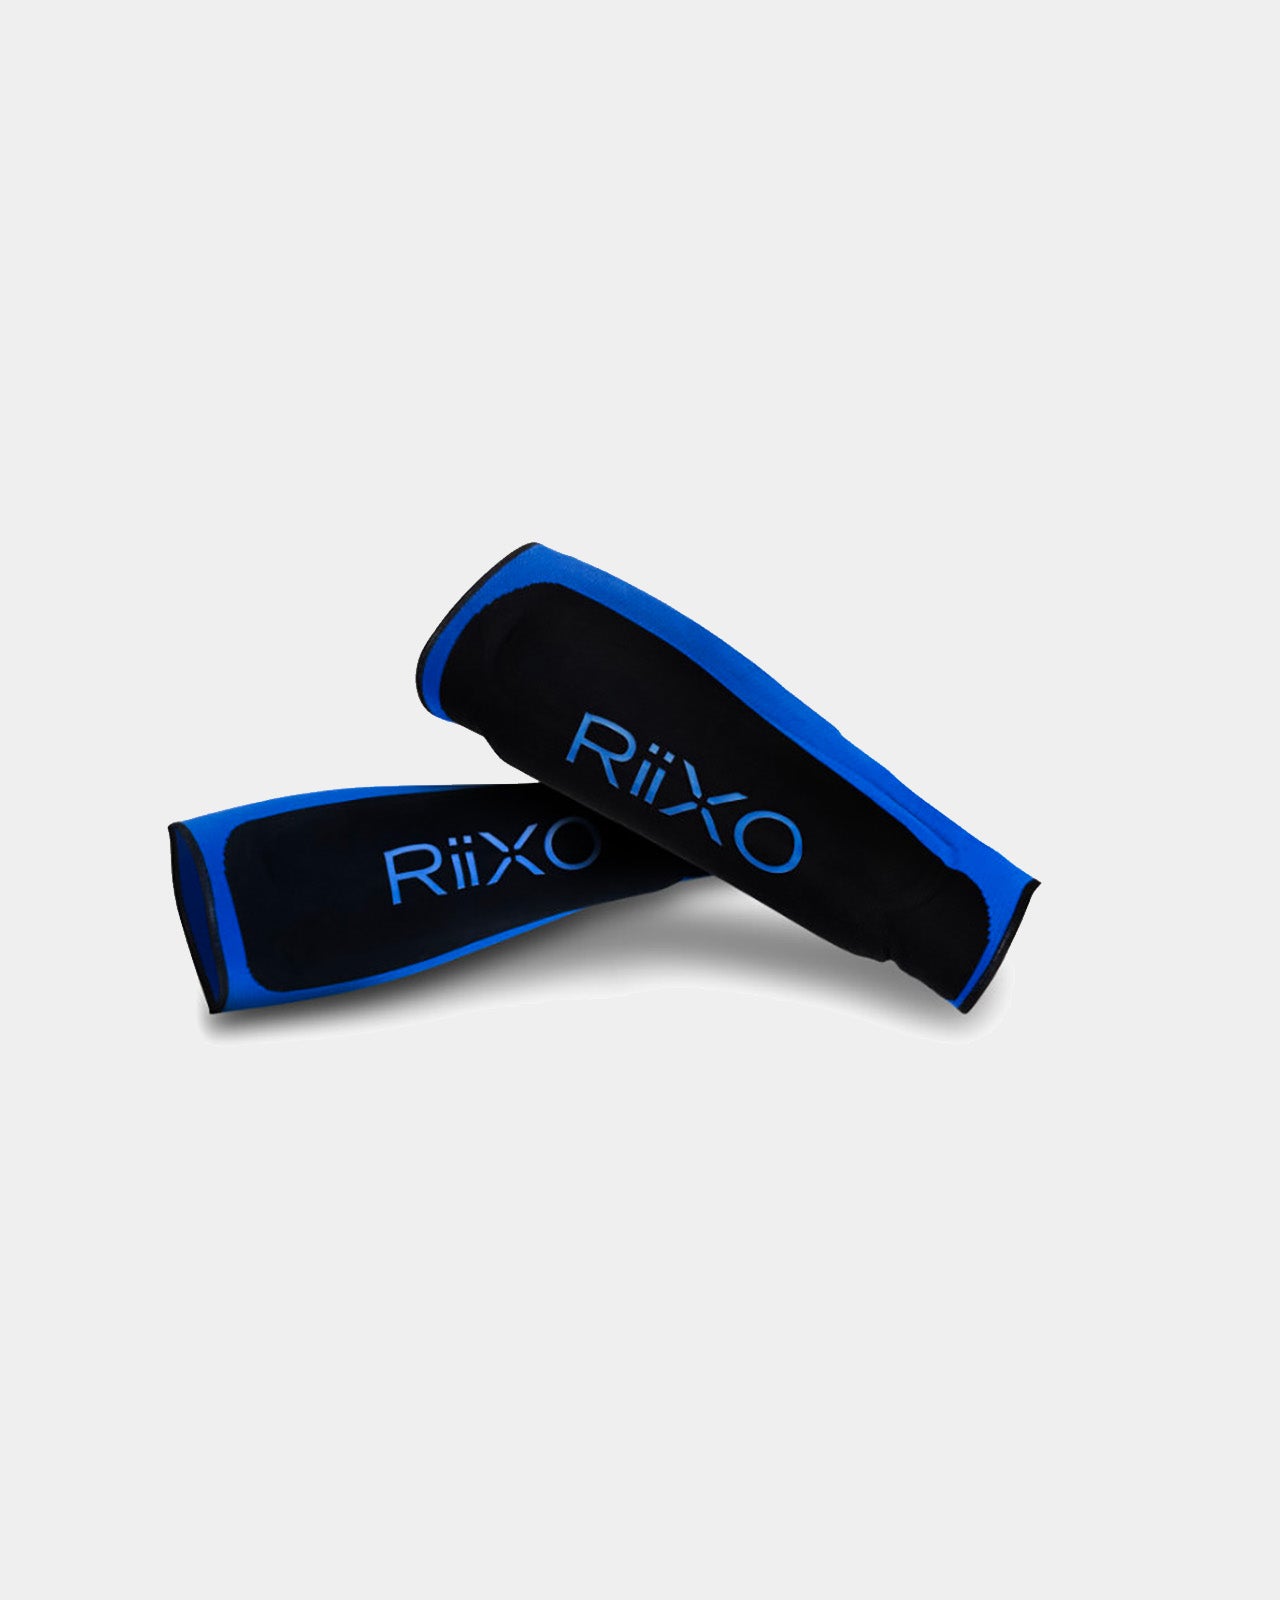 Riixo Recovery Calf Sleeve - Compression, Ice, Heat